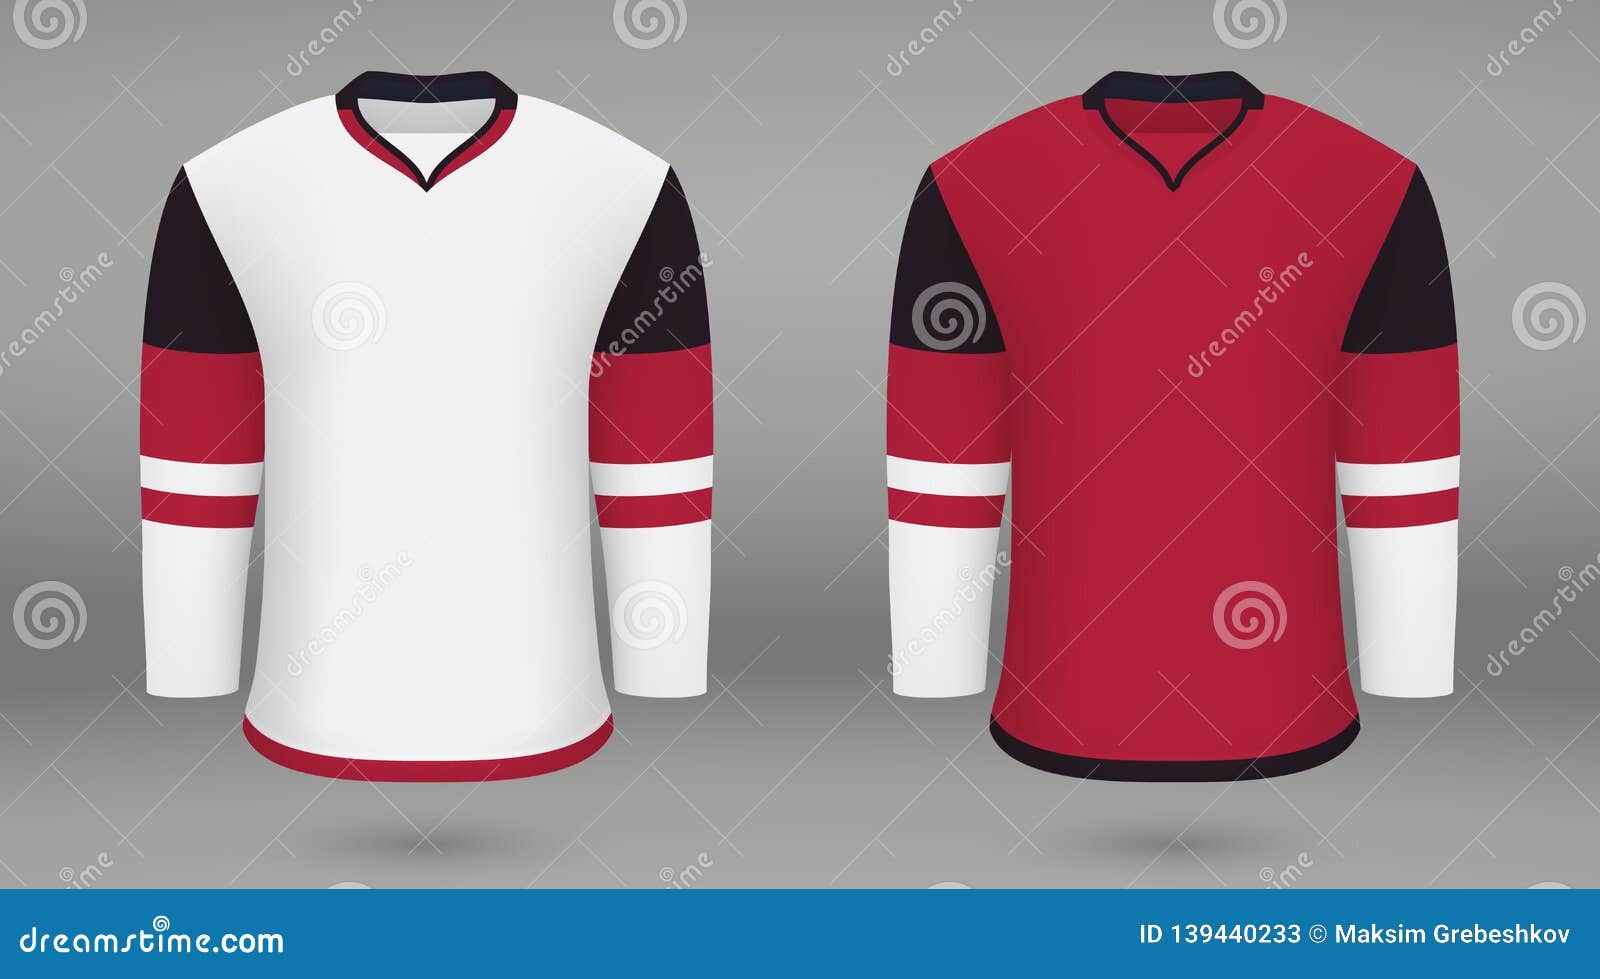 Download Shirt Template Forice Hockey Jersey Stock Illustration Illustration Of Nation Identity 139440233